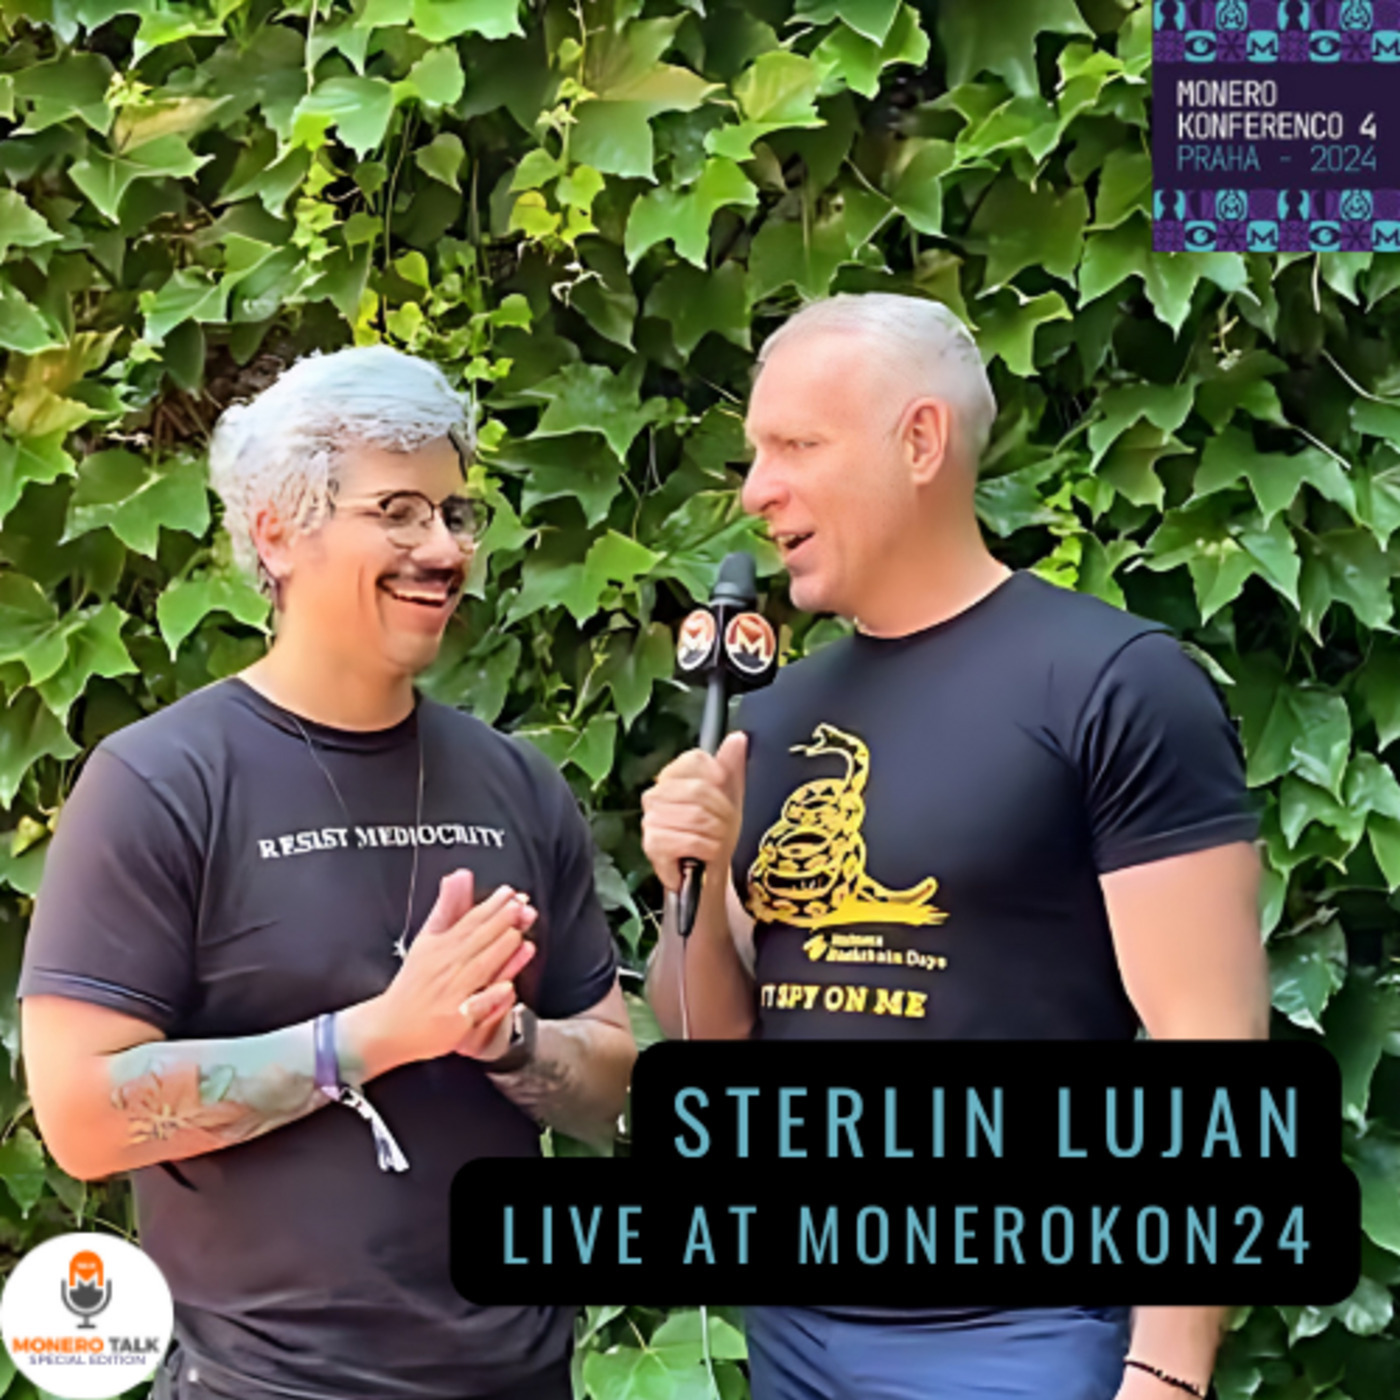 Monero Talk: LIVE at MoneroKon24 w/ Sterlin Lujan – Monero Talk